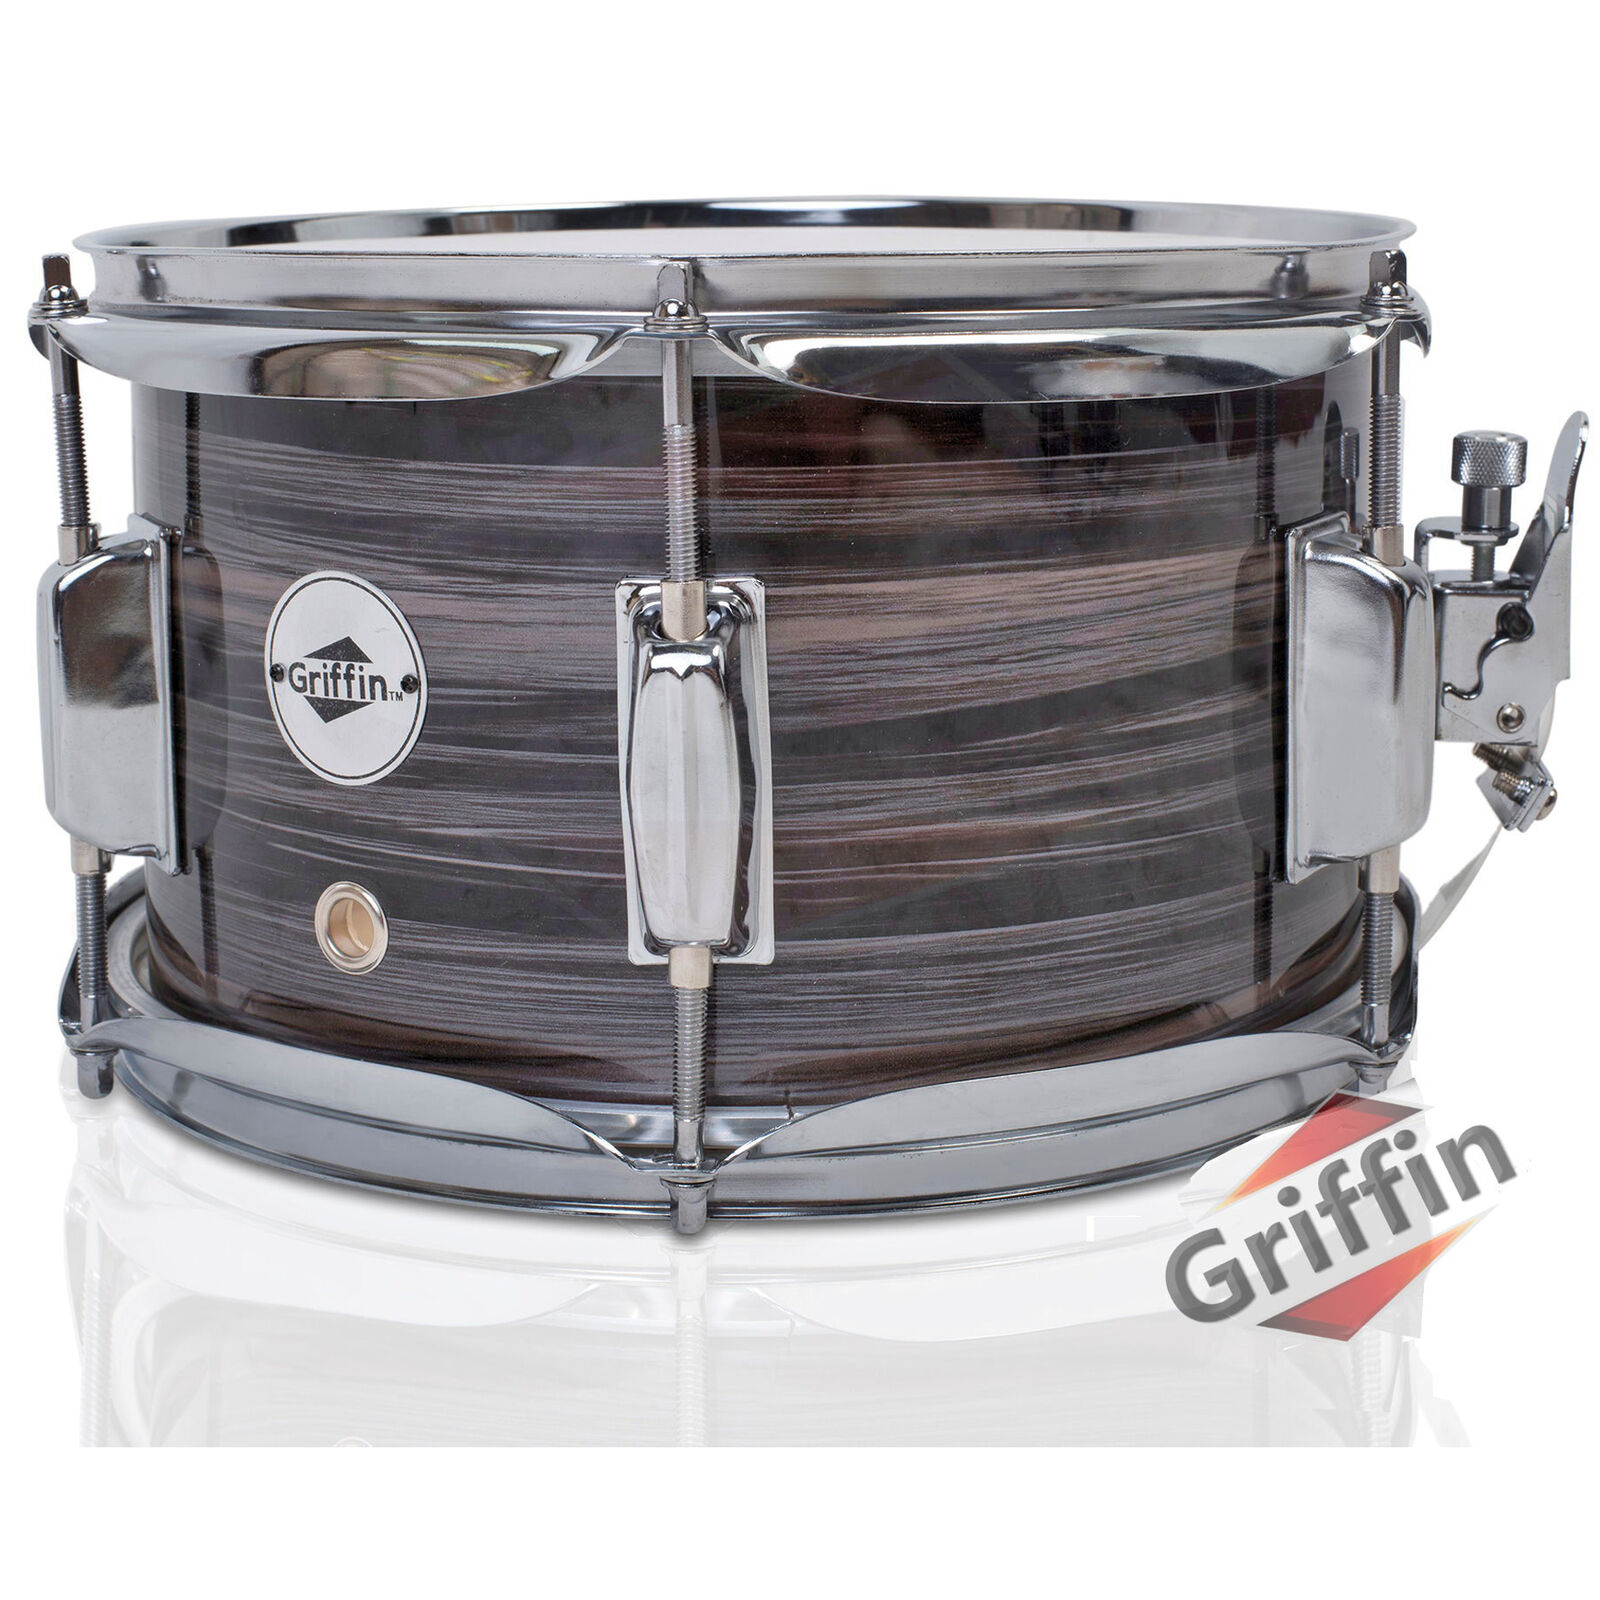 GRIFFIN Firecracker Snare Drum - Popcorn 10x6 Zebra Poplar Wood Shell Soprano